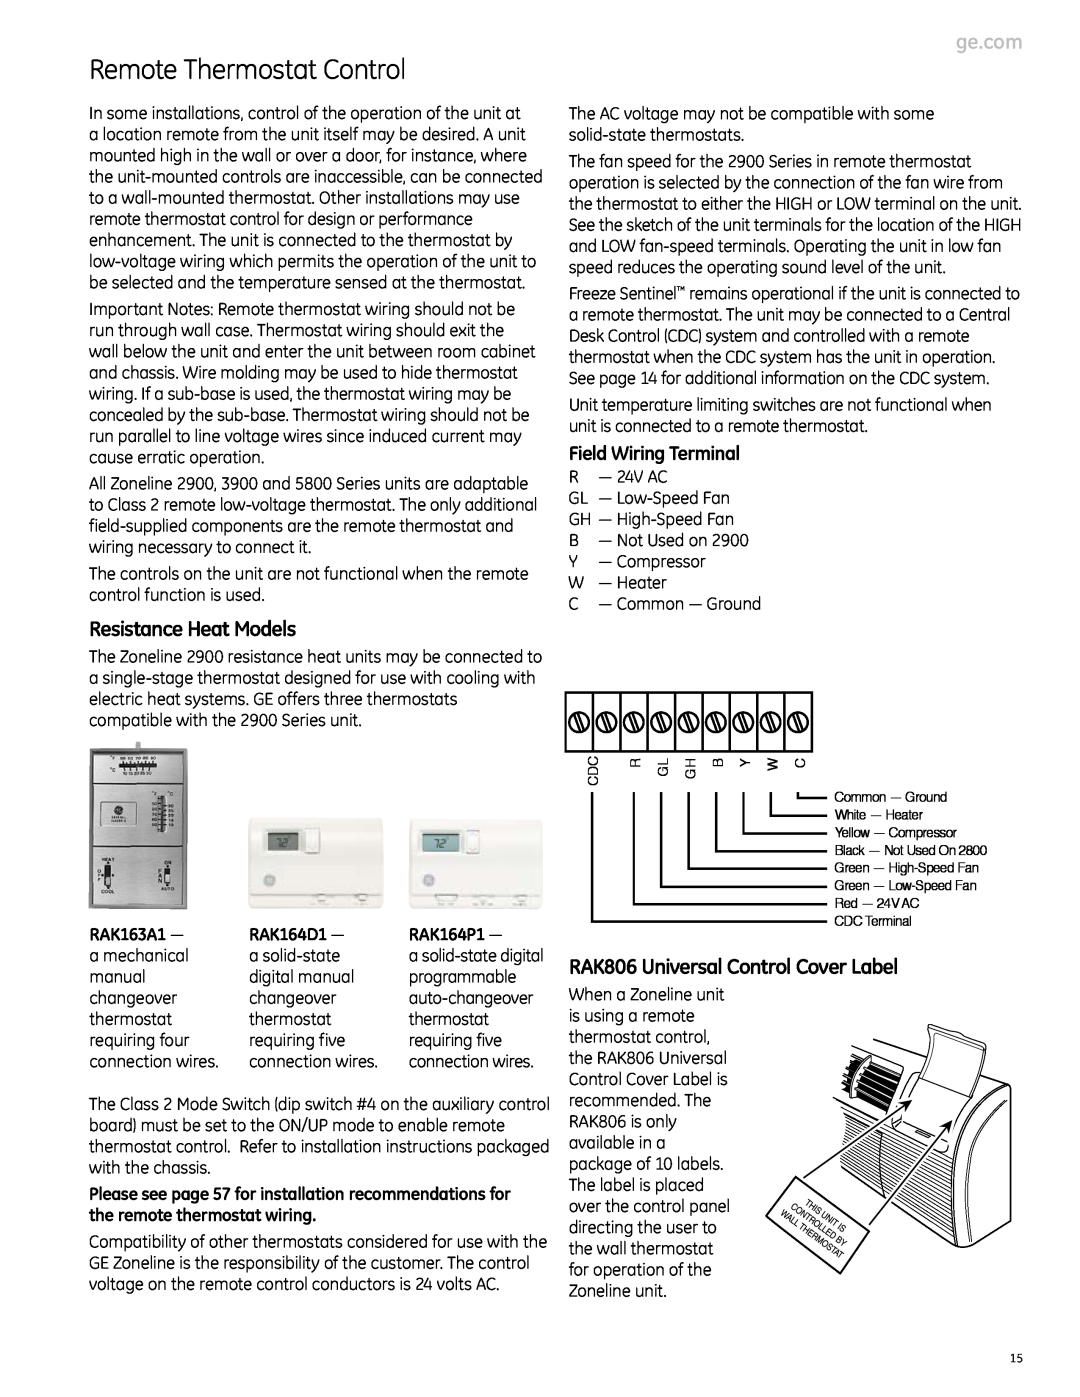 GE Monogram 3900 Series Remote Thermostat Control, Resistance Heat Models, RAK806 Universal Control Cover Label, RAK163A1 